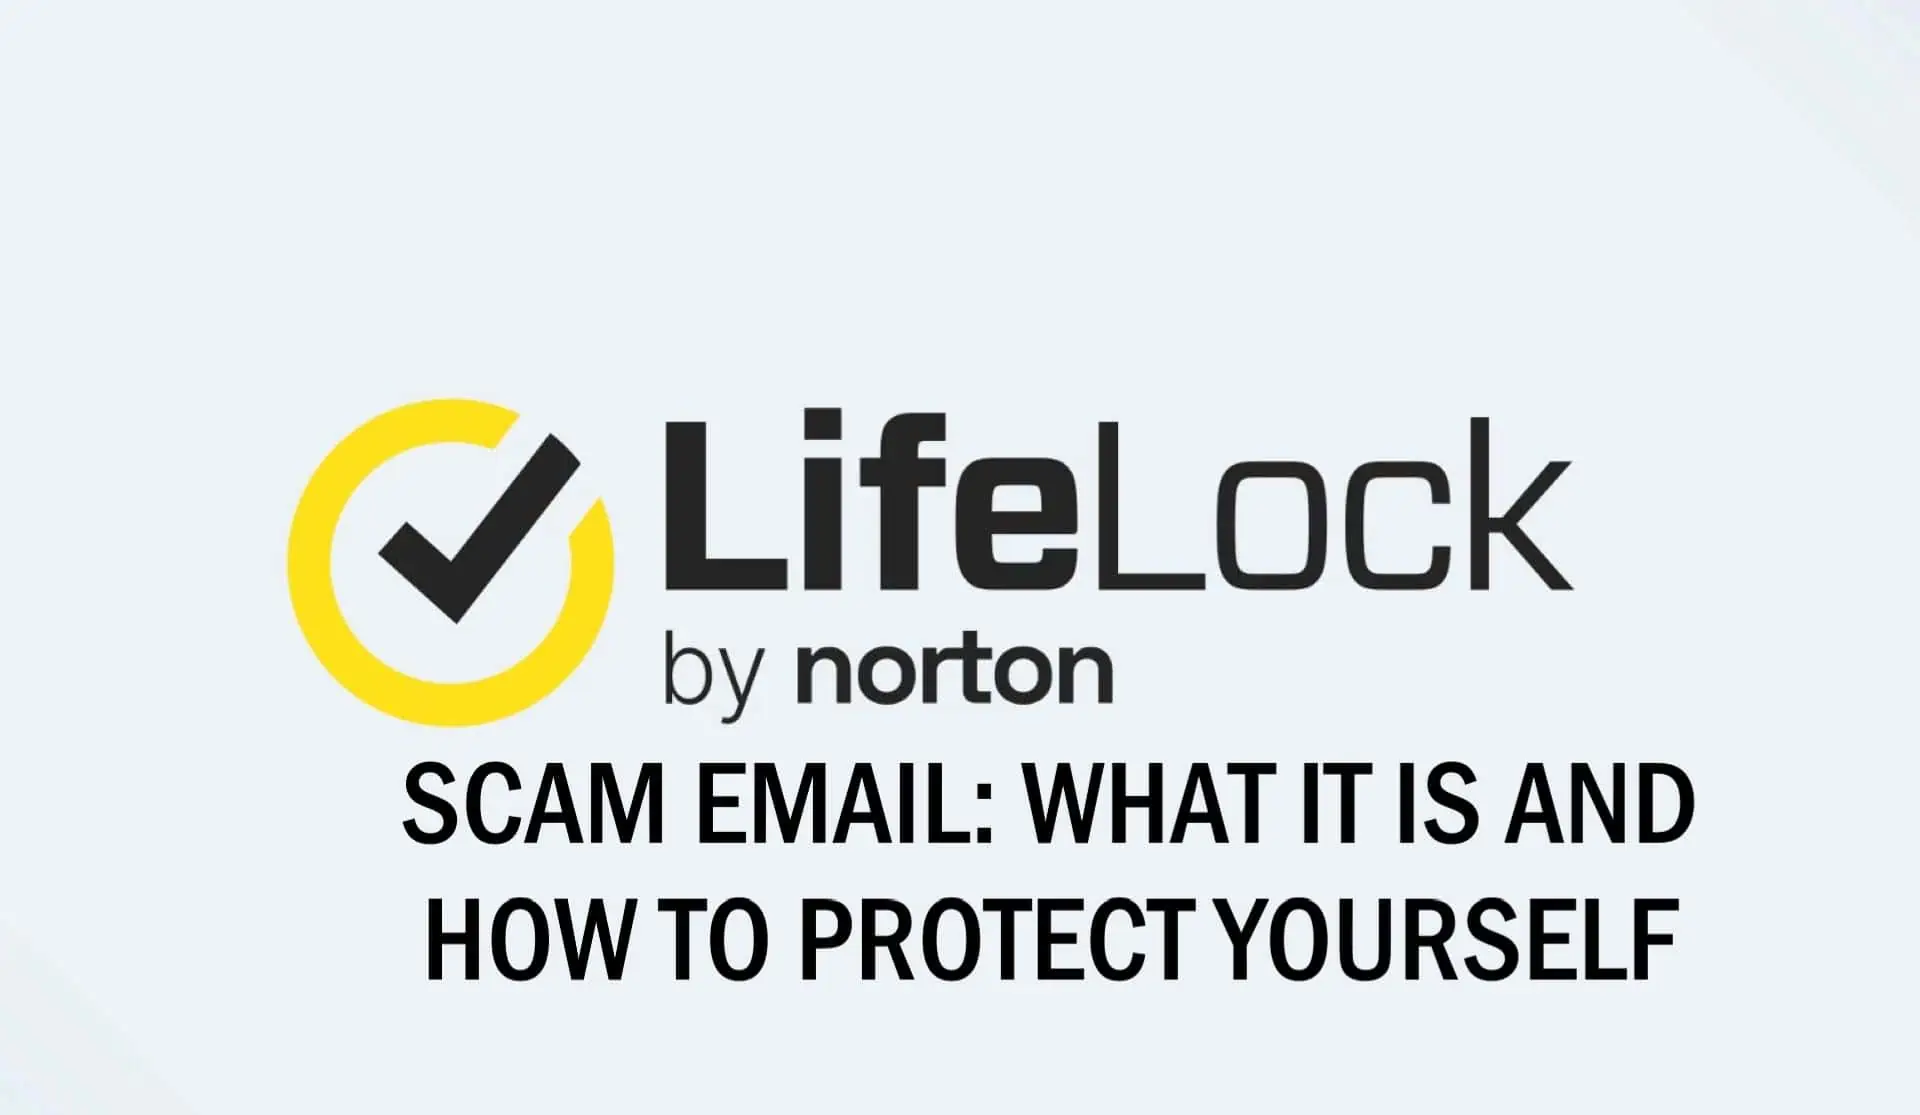 norton lifelock scam email